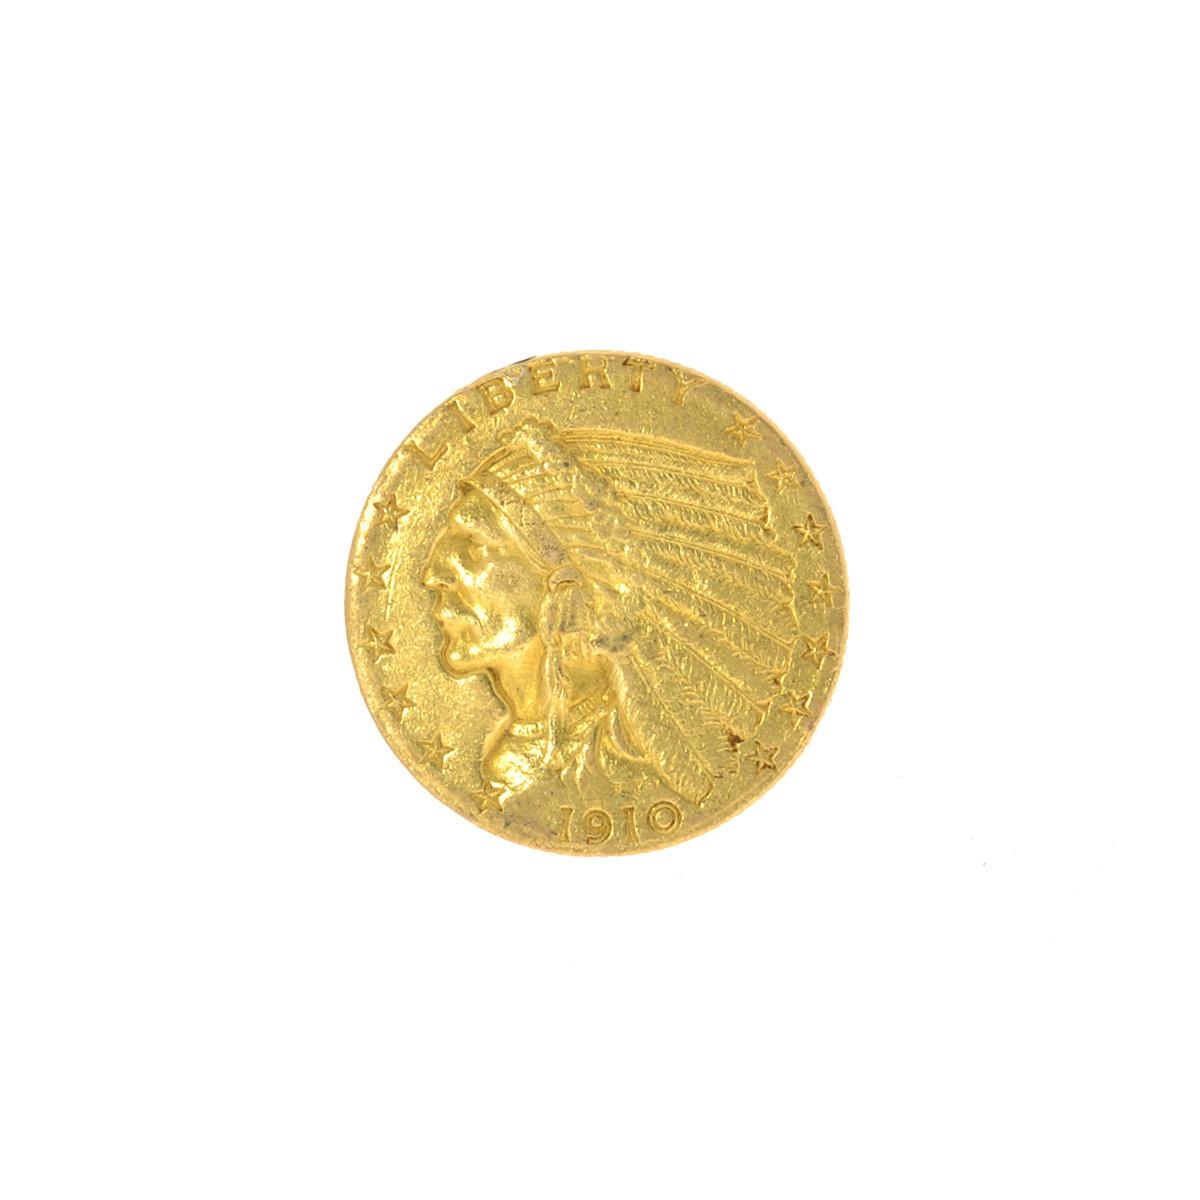 *1909 $2.50 U.S. Indian Head Gold Coin (JG N)